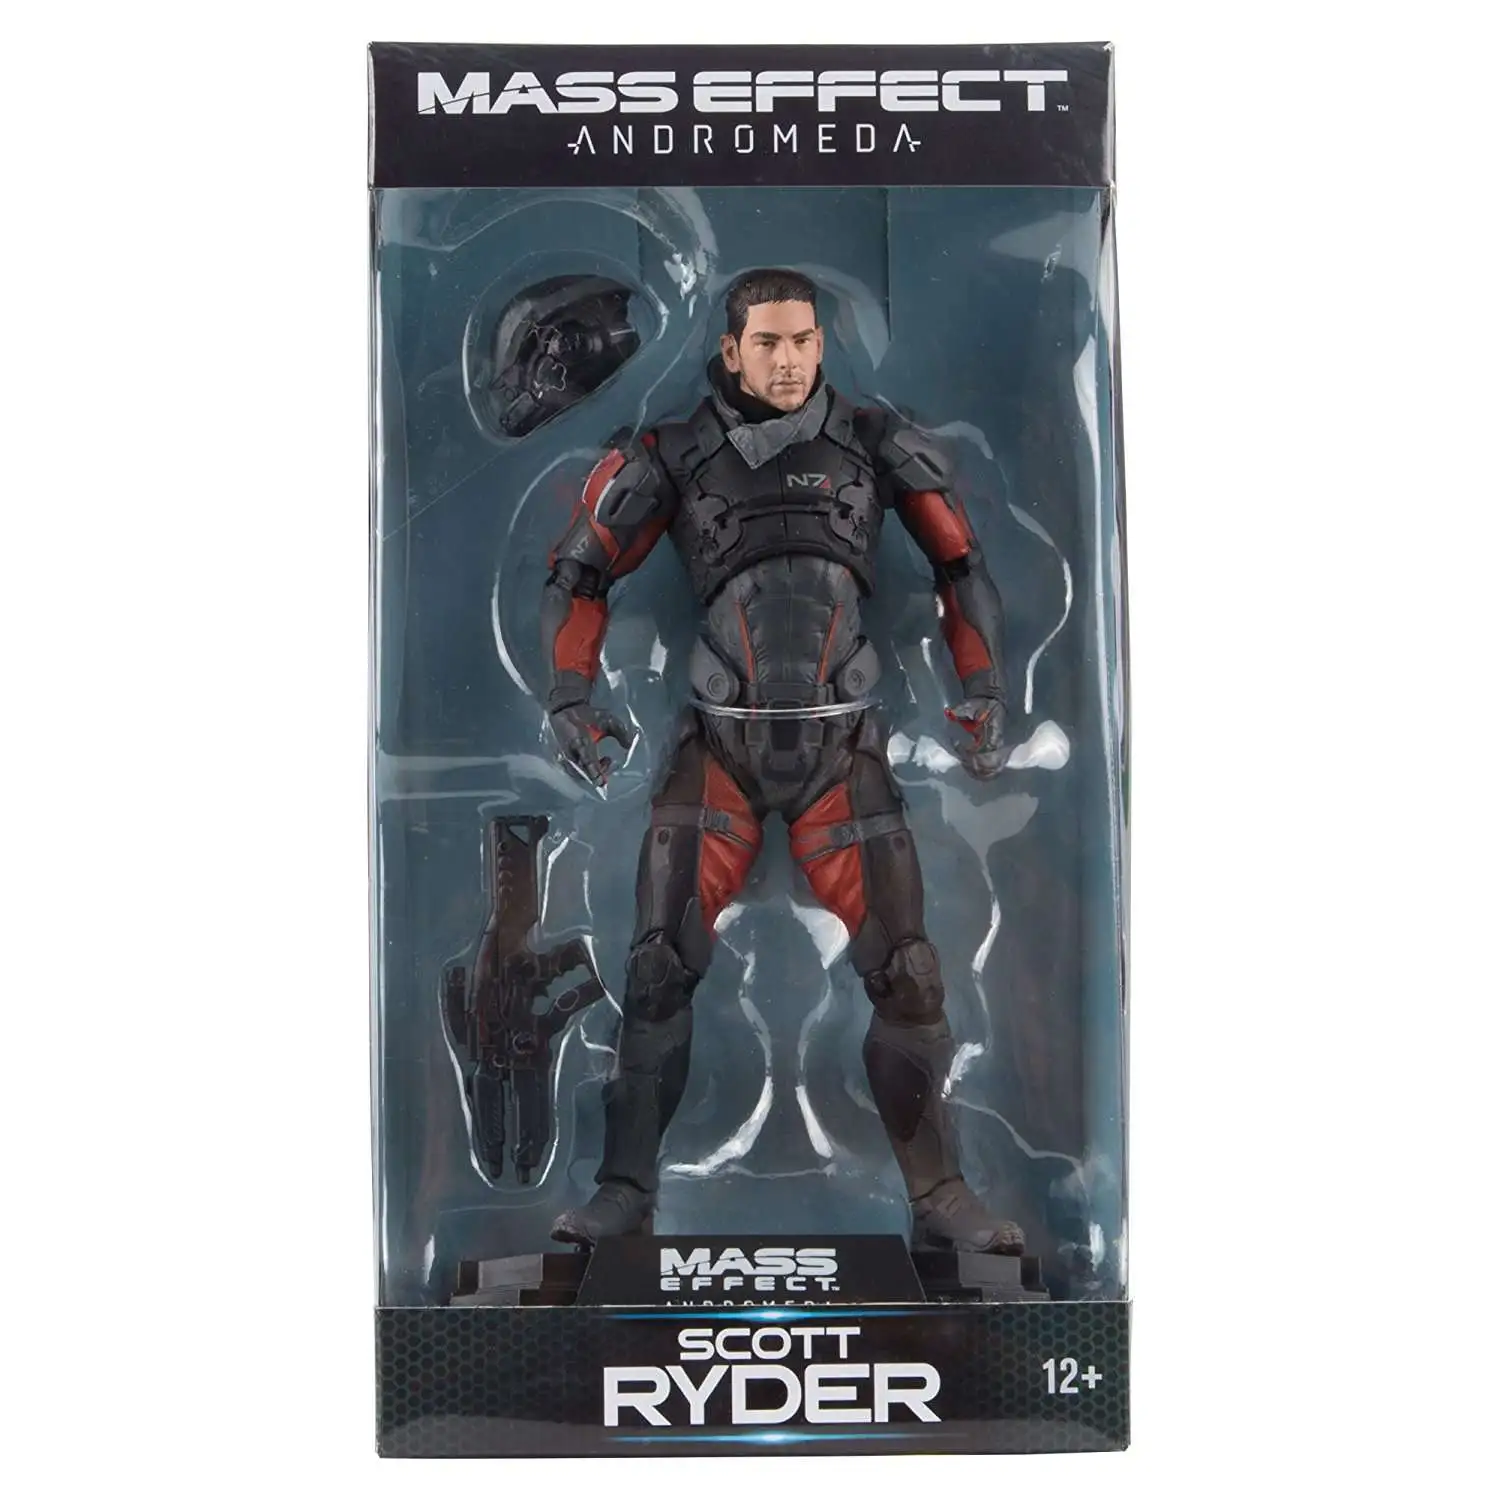 Mass Effect Andromeda Color Tops Green Wave Scott Ryder Action Figure #21 